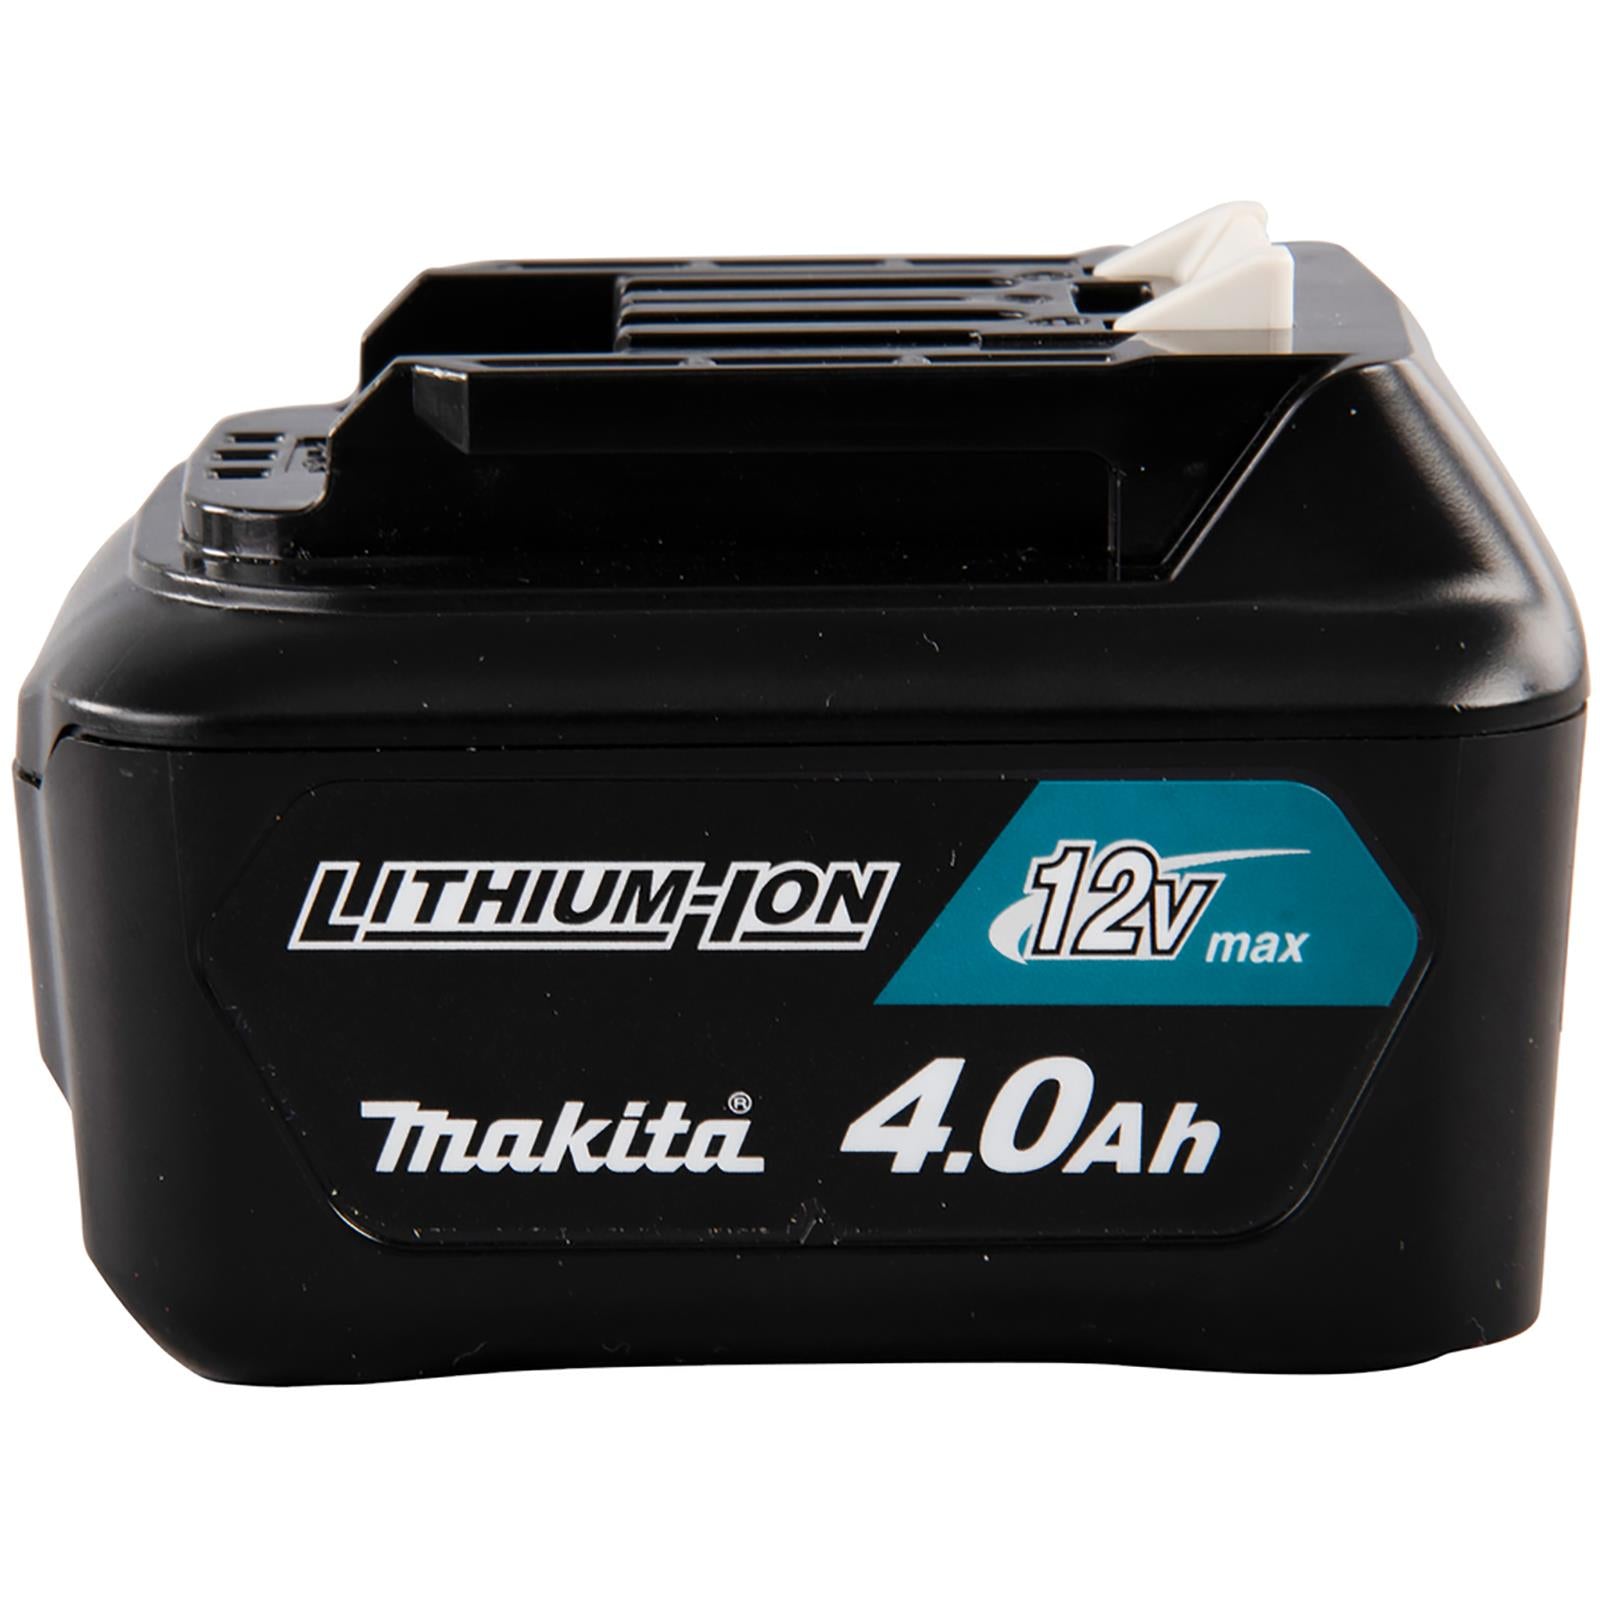 Makita CXT Battery 4.0Ah 12V Max Li-ion Light Compact Charge Level Indicator BL1041B 2 Piece